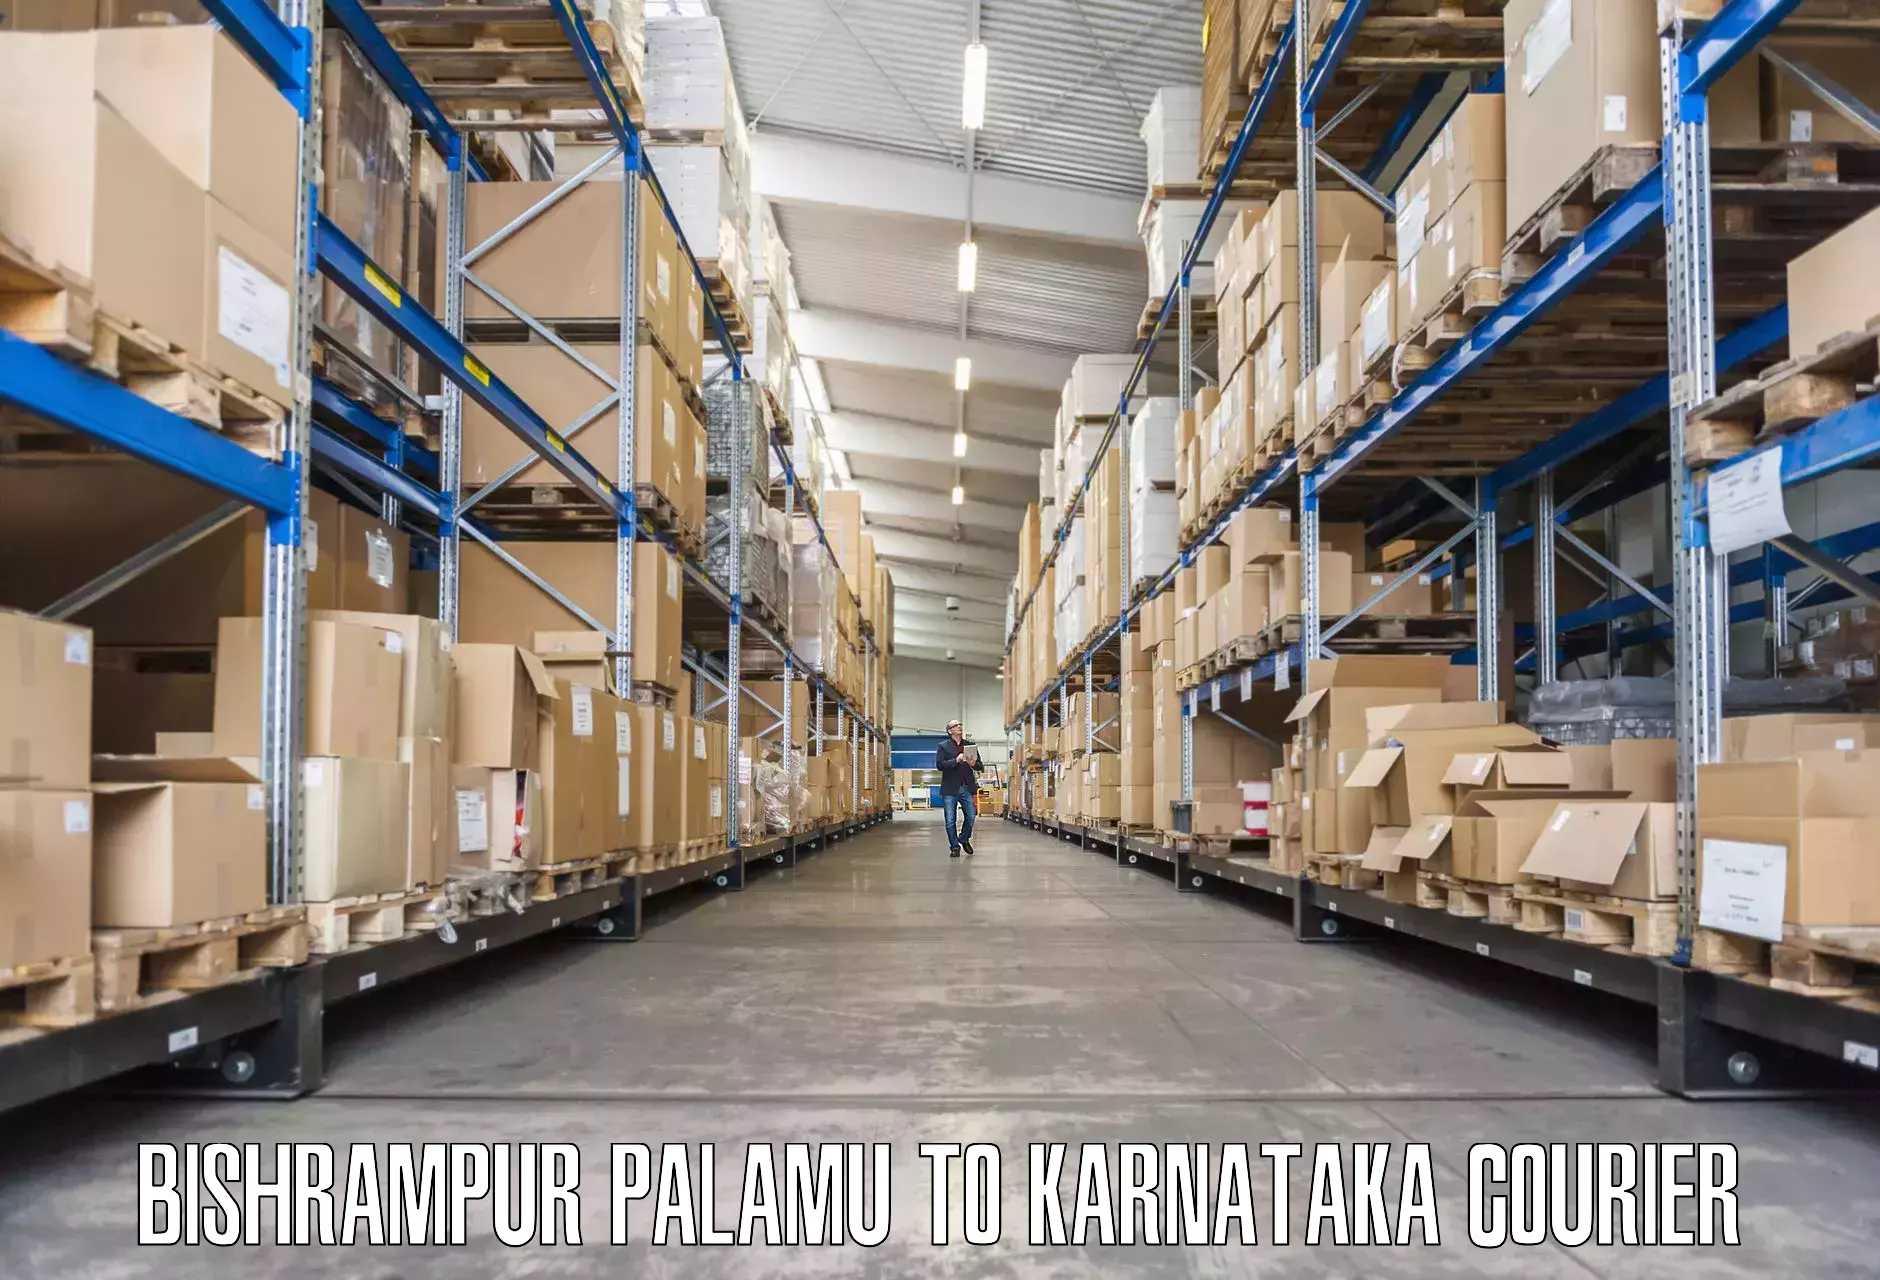 Furniture moving specialists Bishrampur Palamu to Mangalore Port